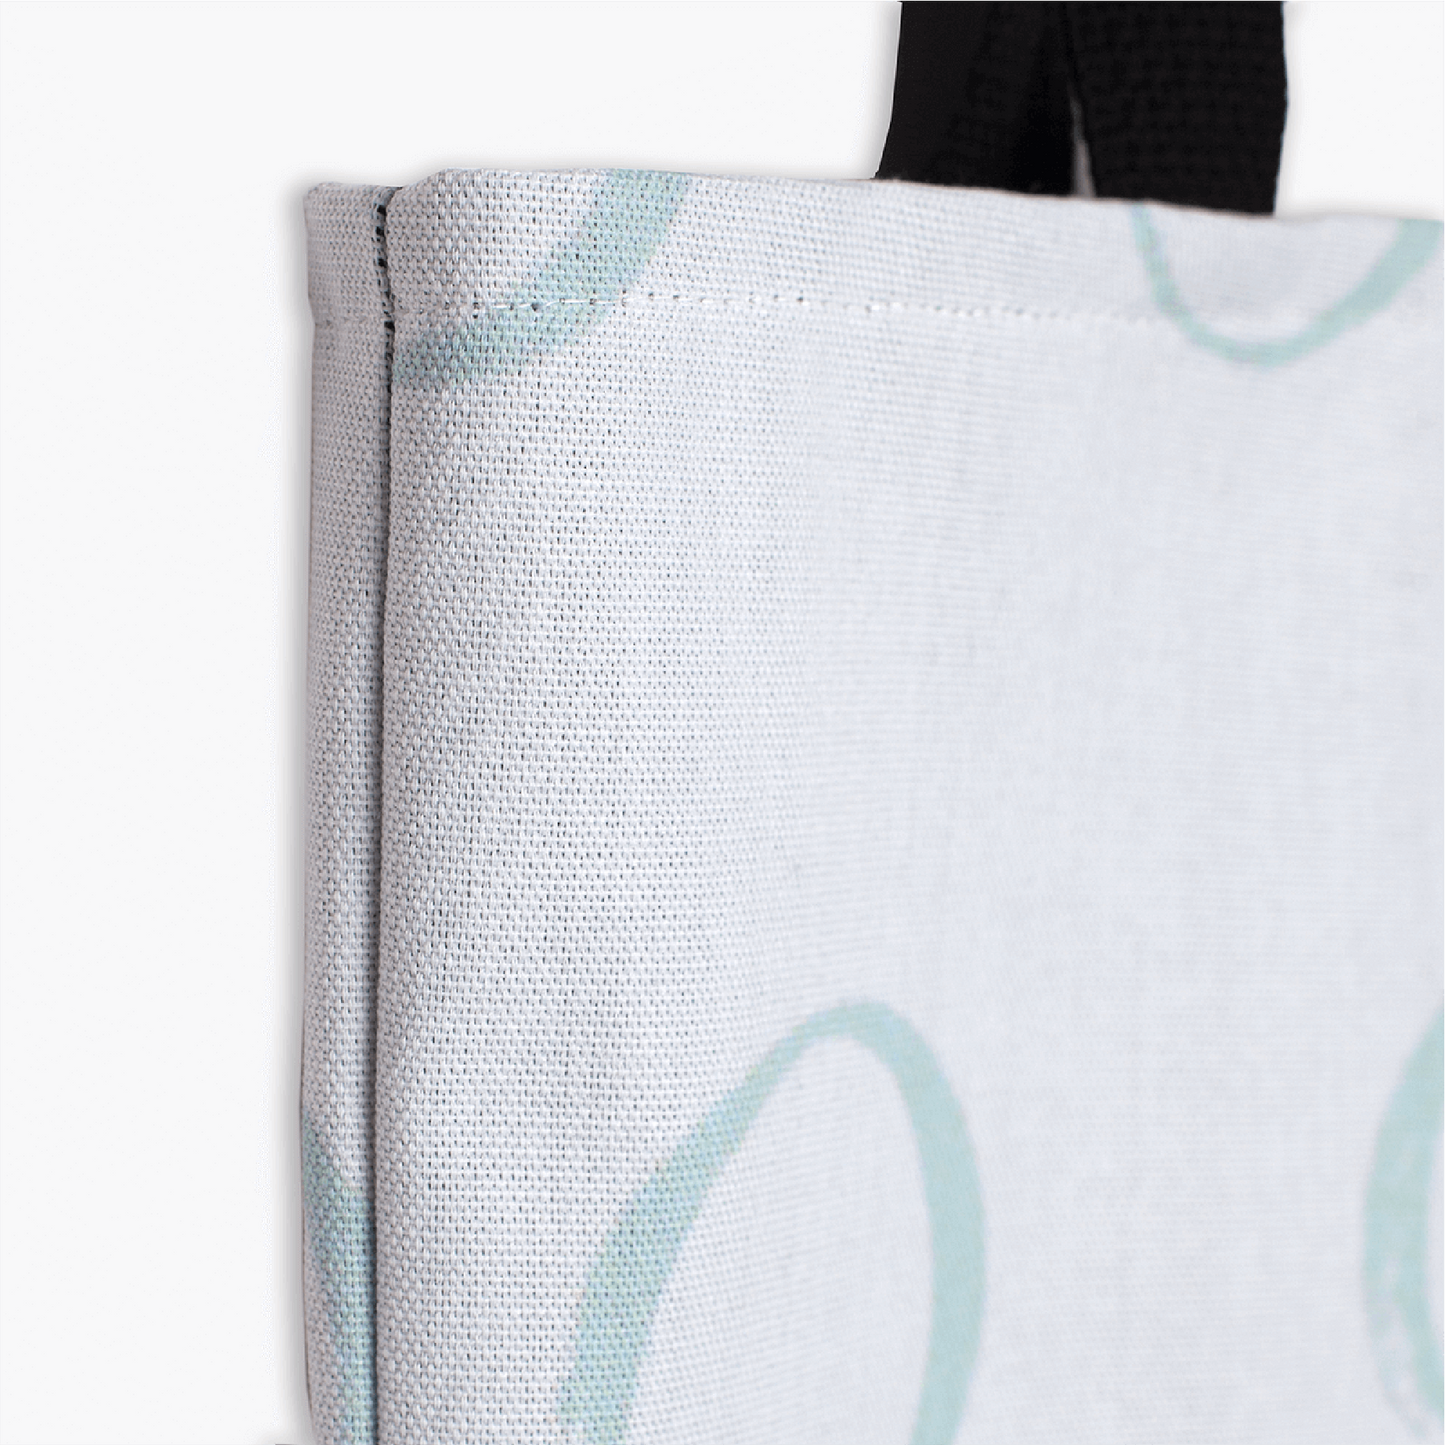 African Fabric Tote Bag Weekender Bag, Juneteenth Gift, Overnight Travel Bag